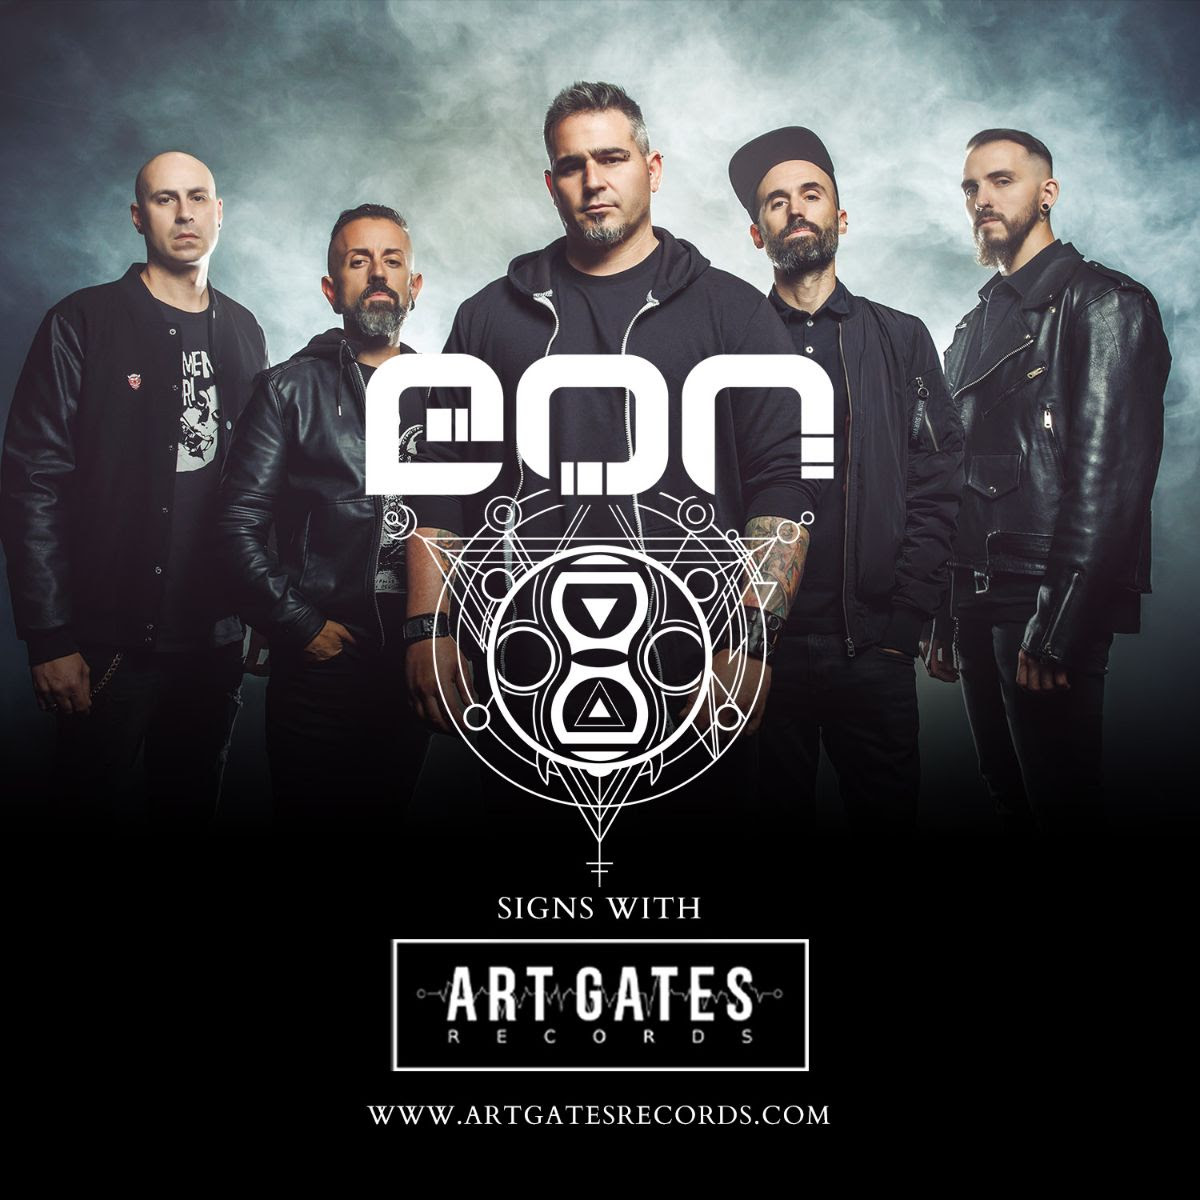 La banda madrileña eon firma con el sello Art Gates Records